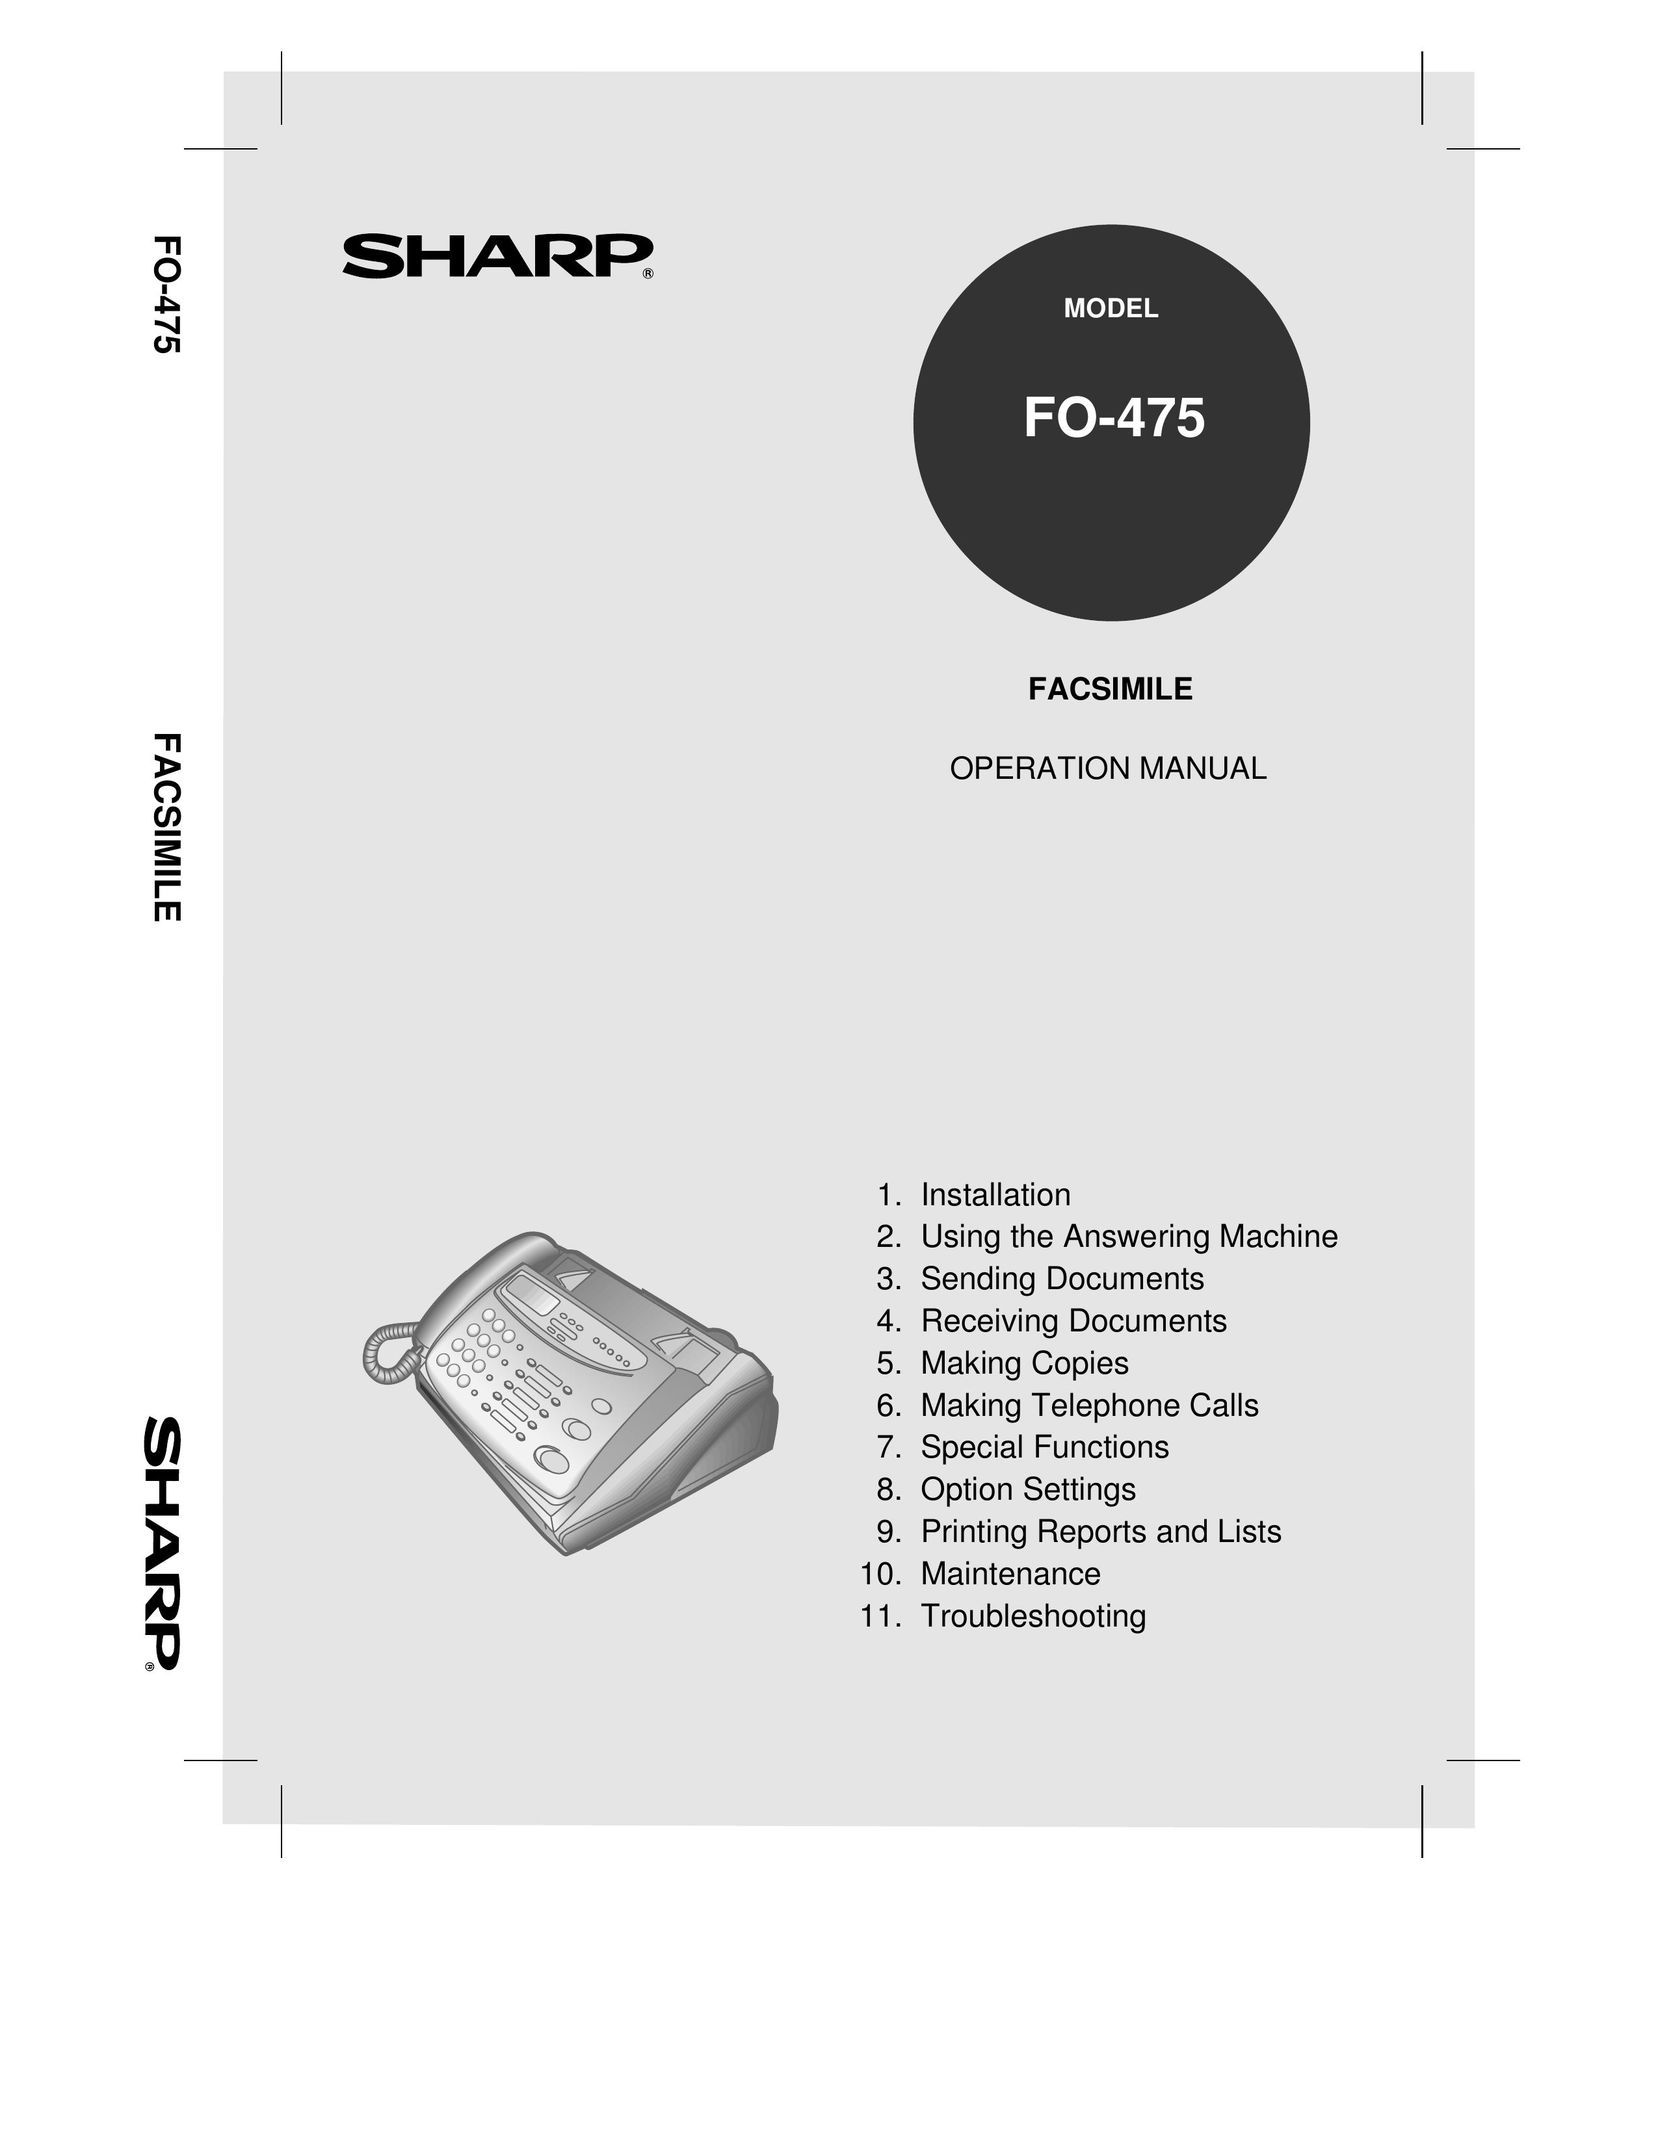 Sharp FO-475 Answering Machine User Manual